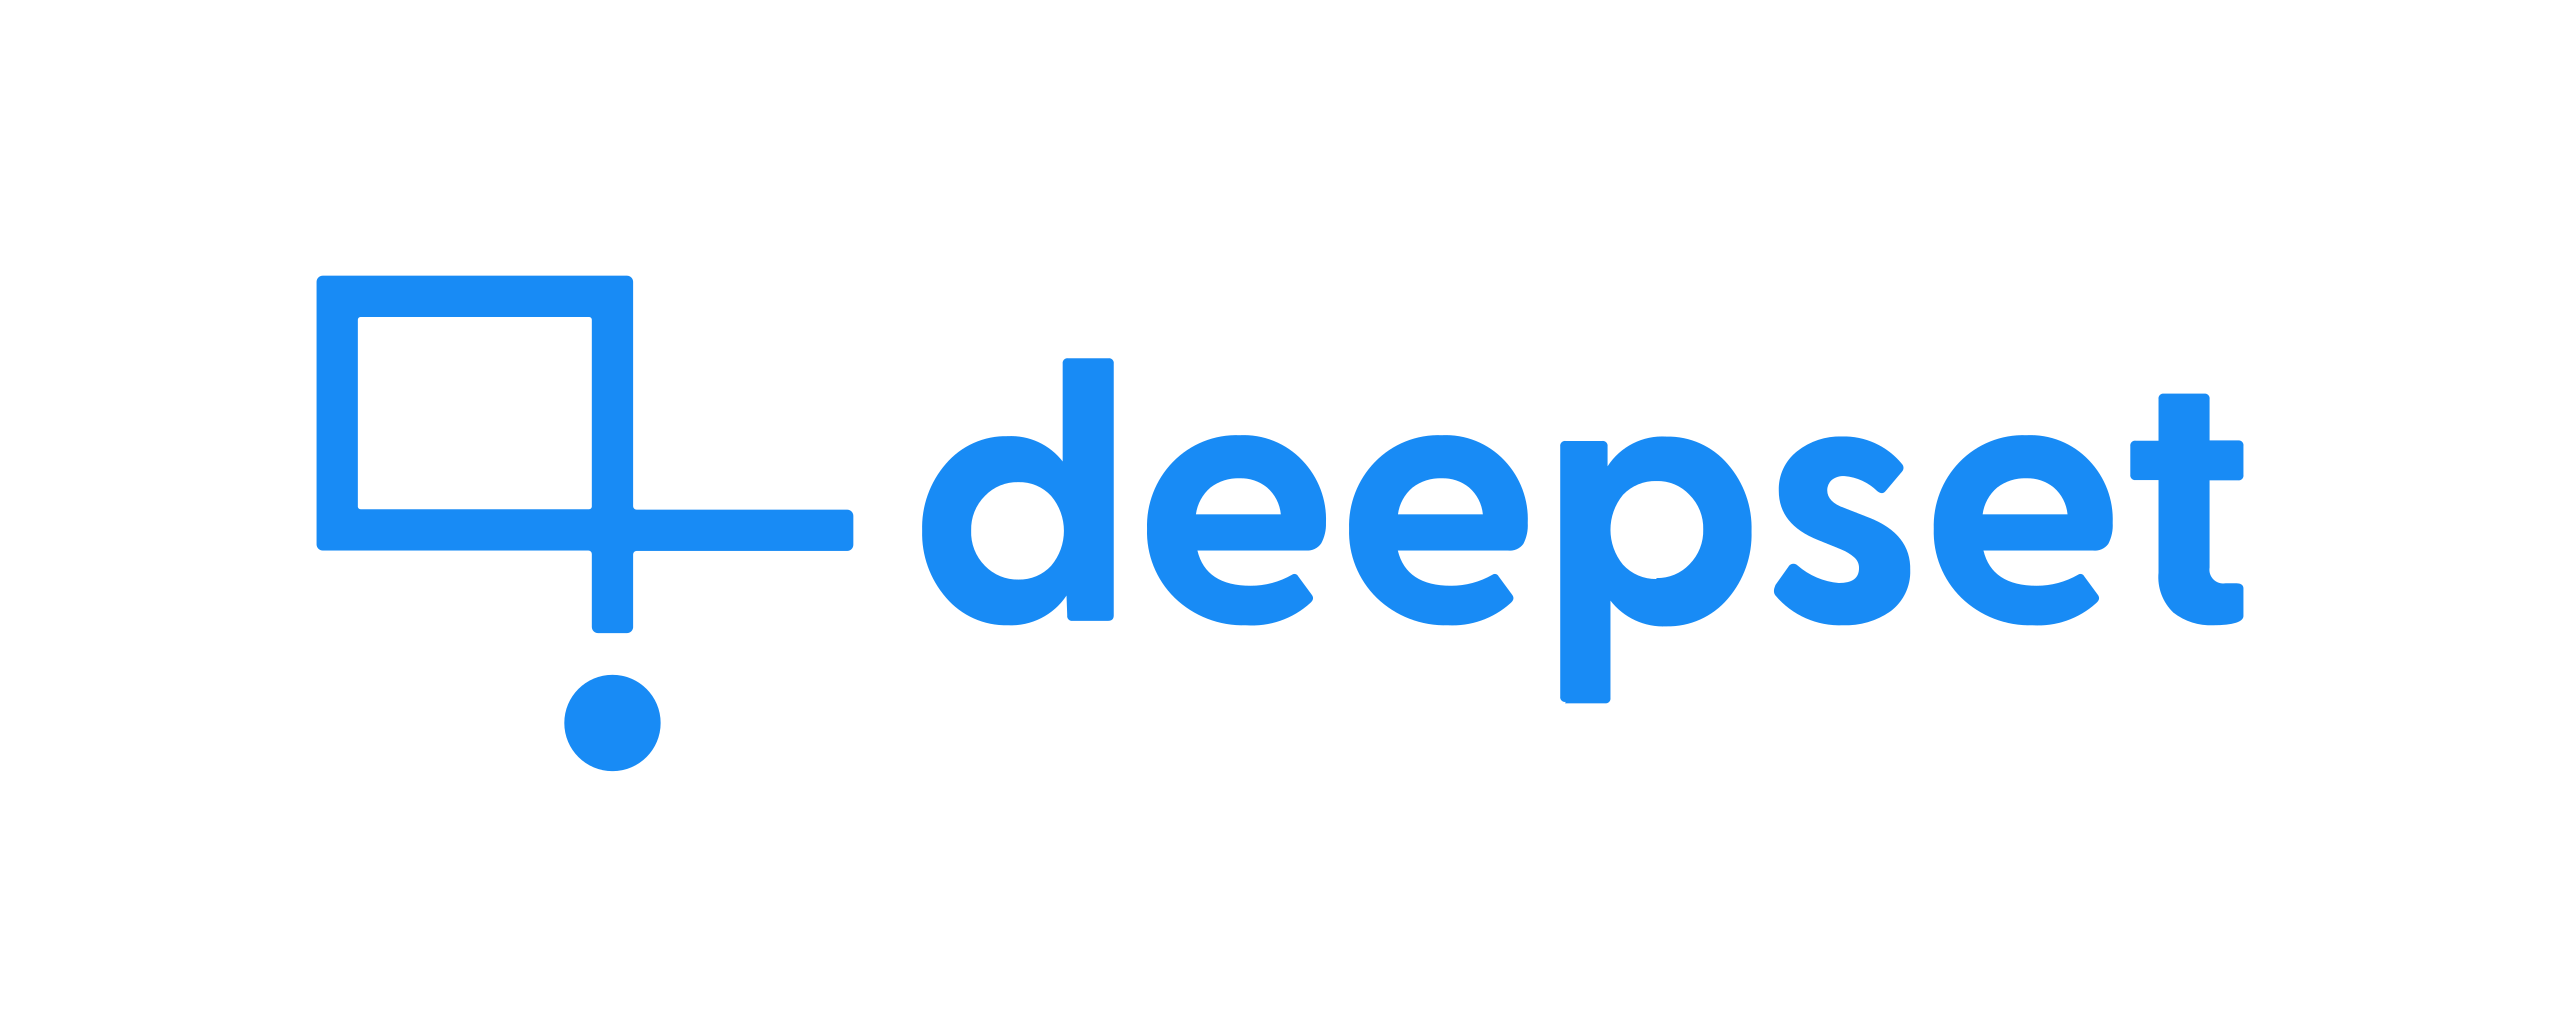 File:Deepset.svg - Wikipedia